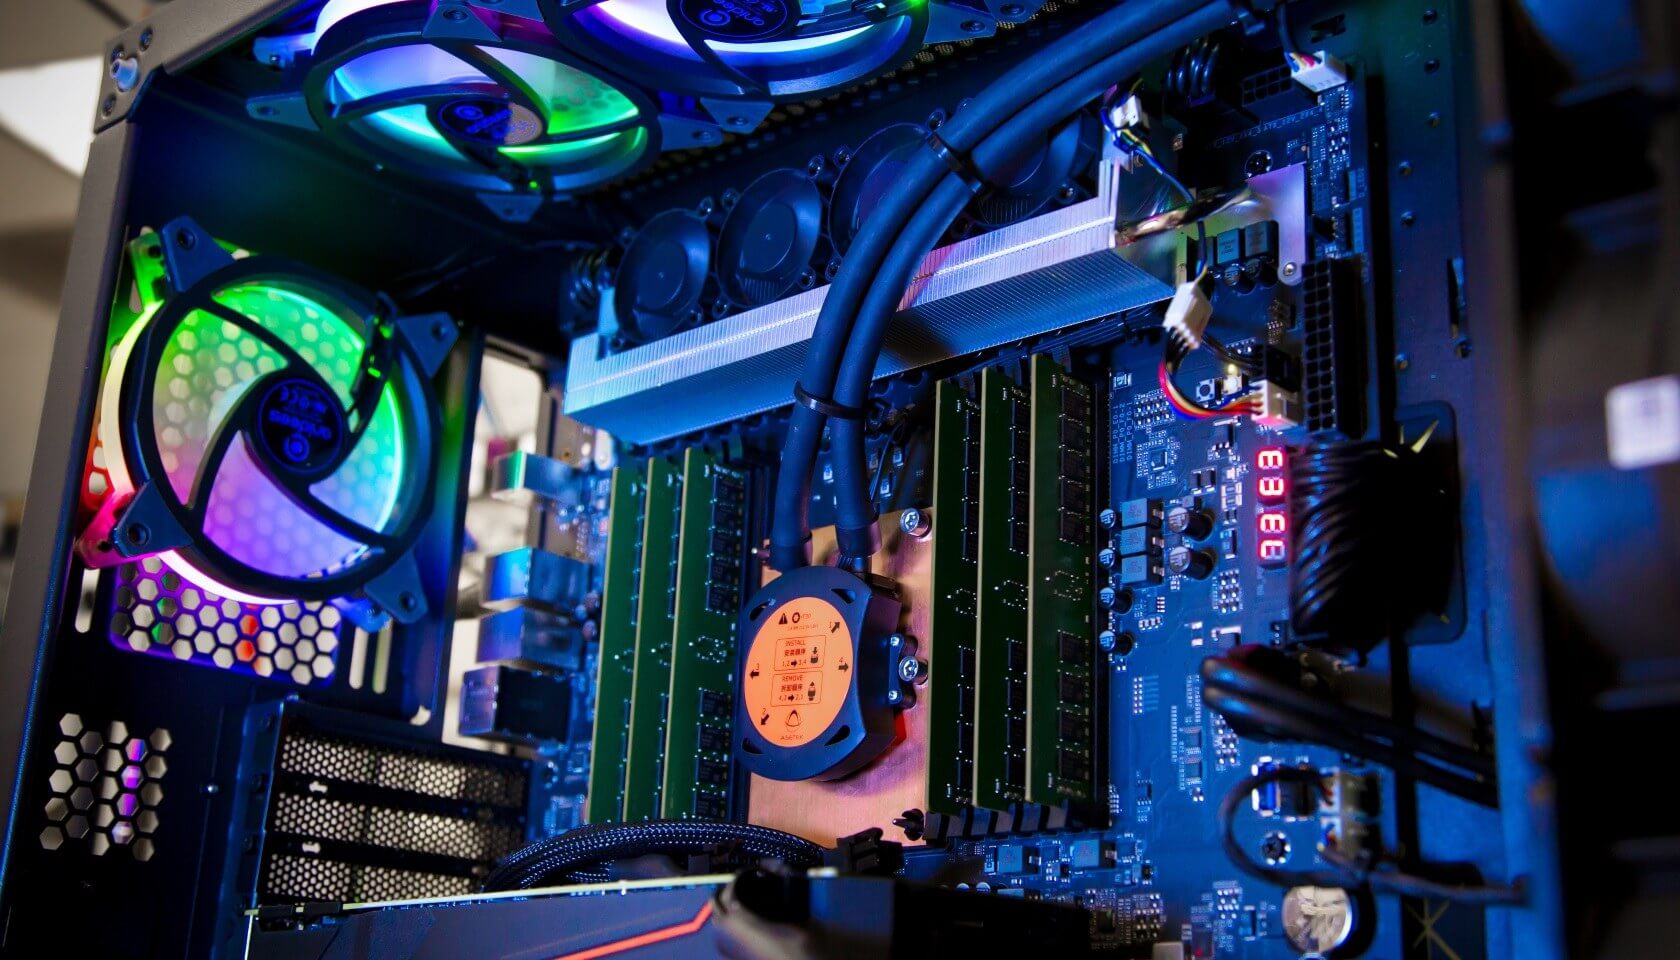 Intel's latest Xeon W-3175X is a 28-core, 56-thread unlocked processor